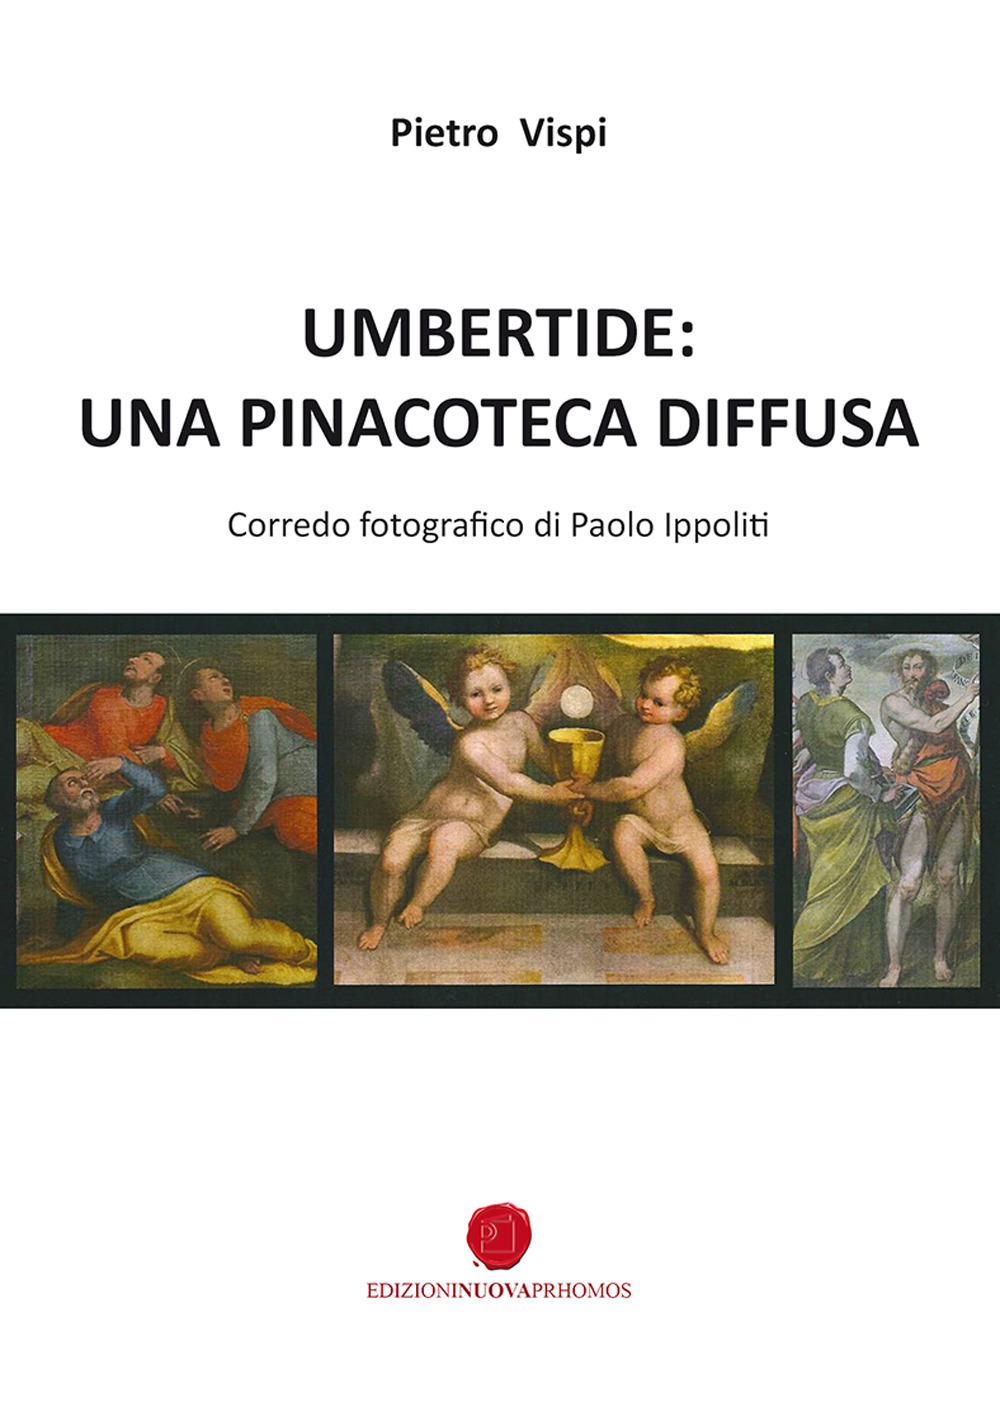 Umbertide: una pinacoteca diffusa